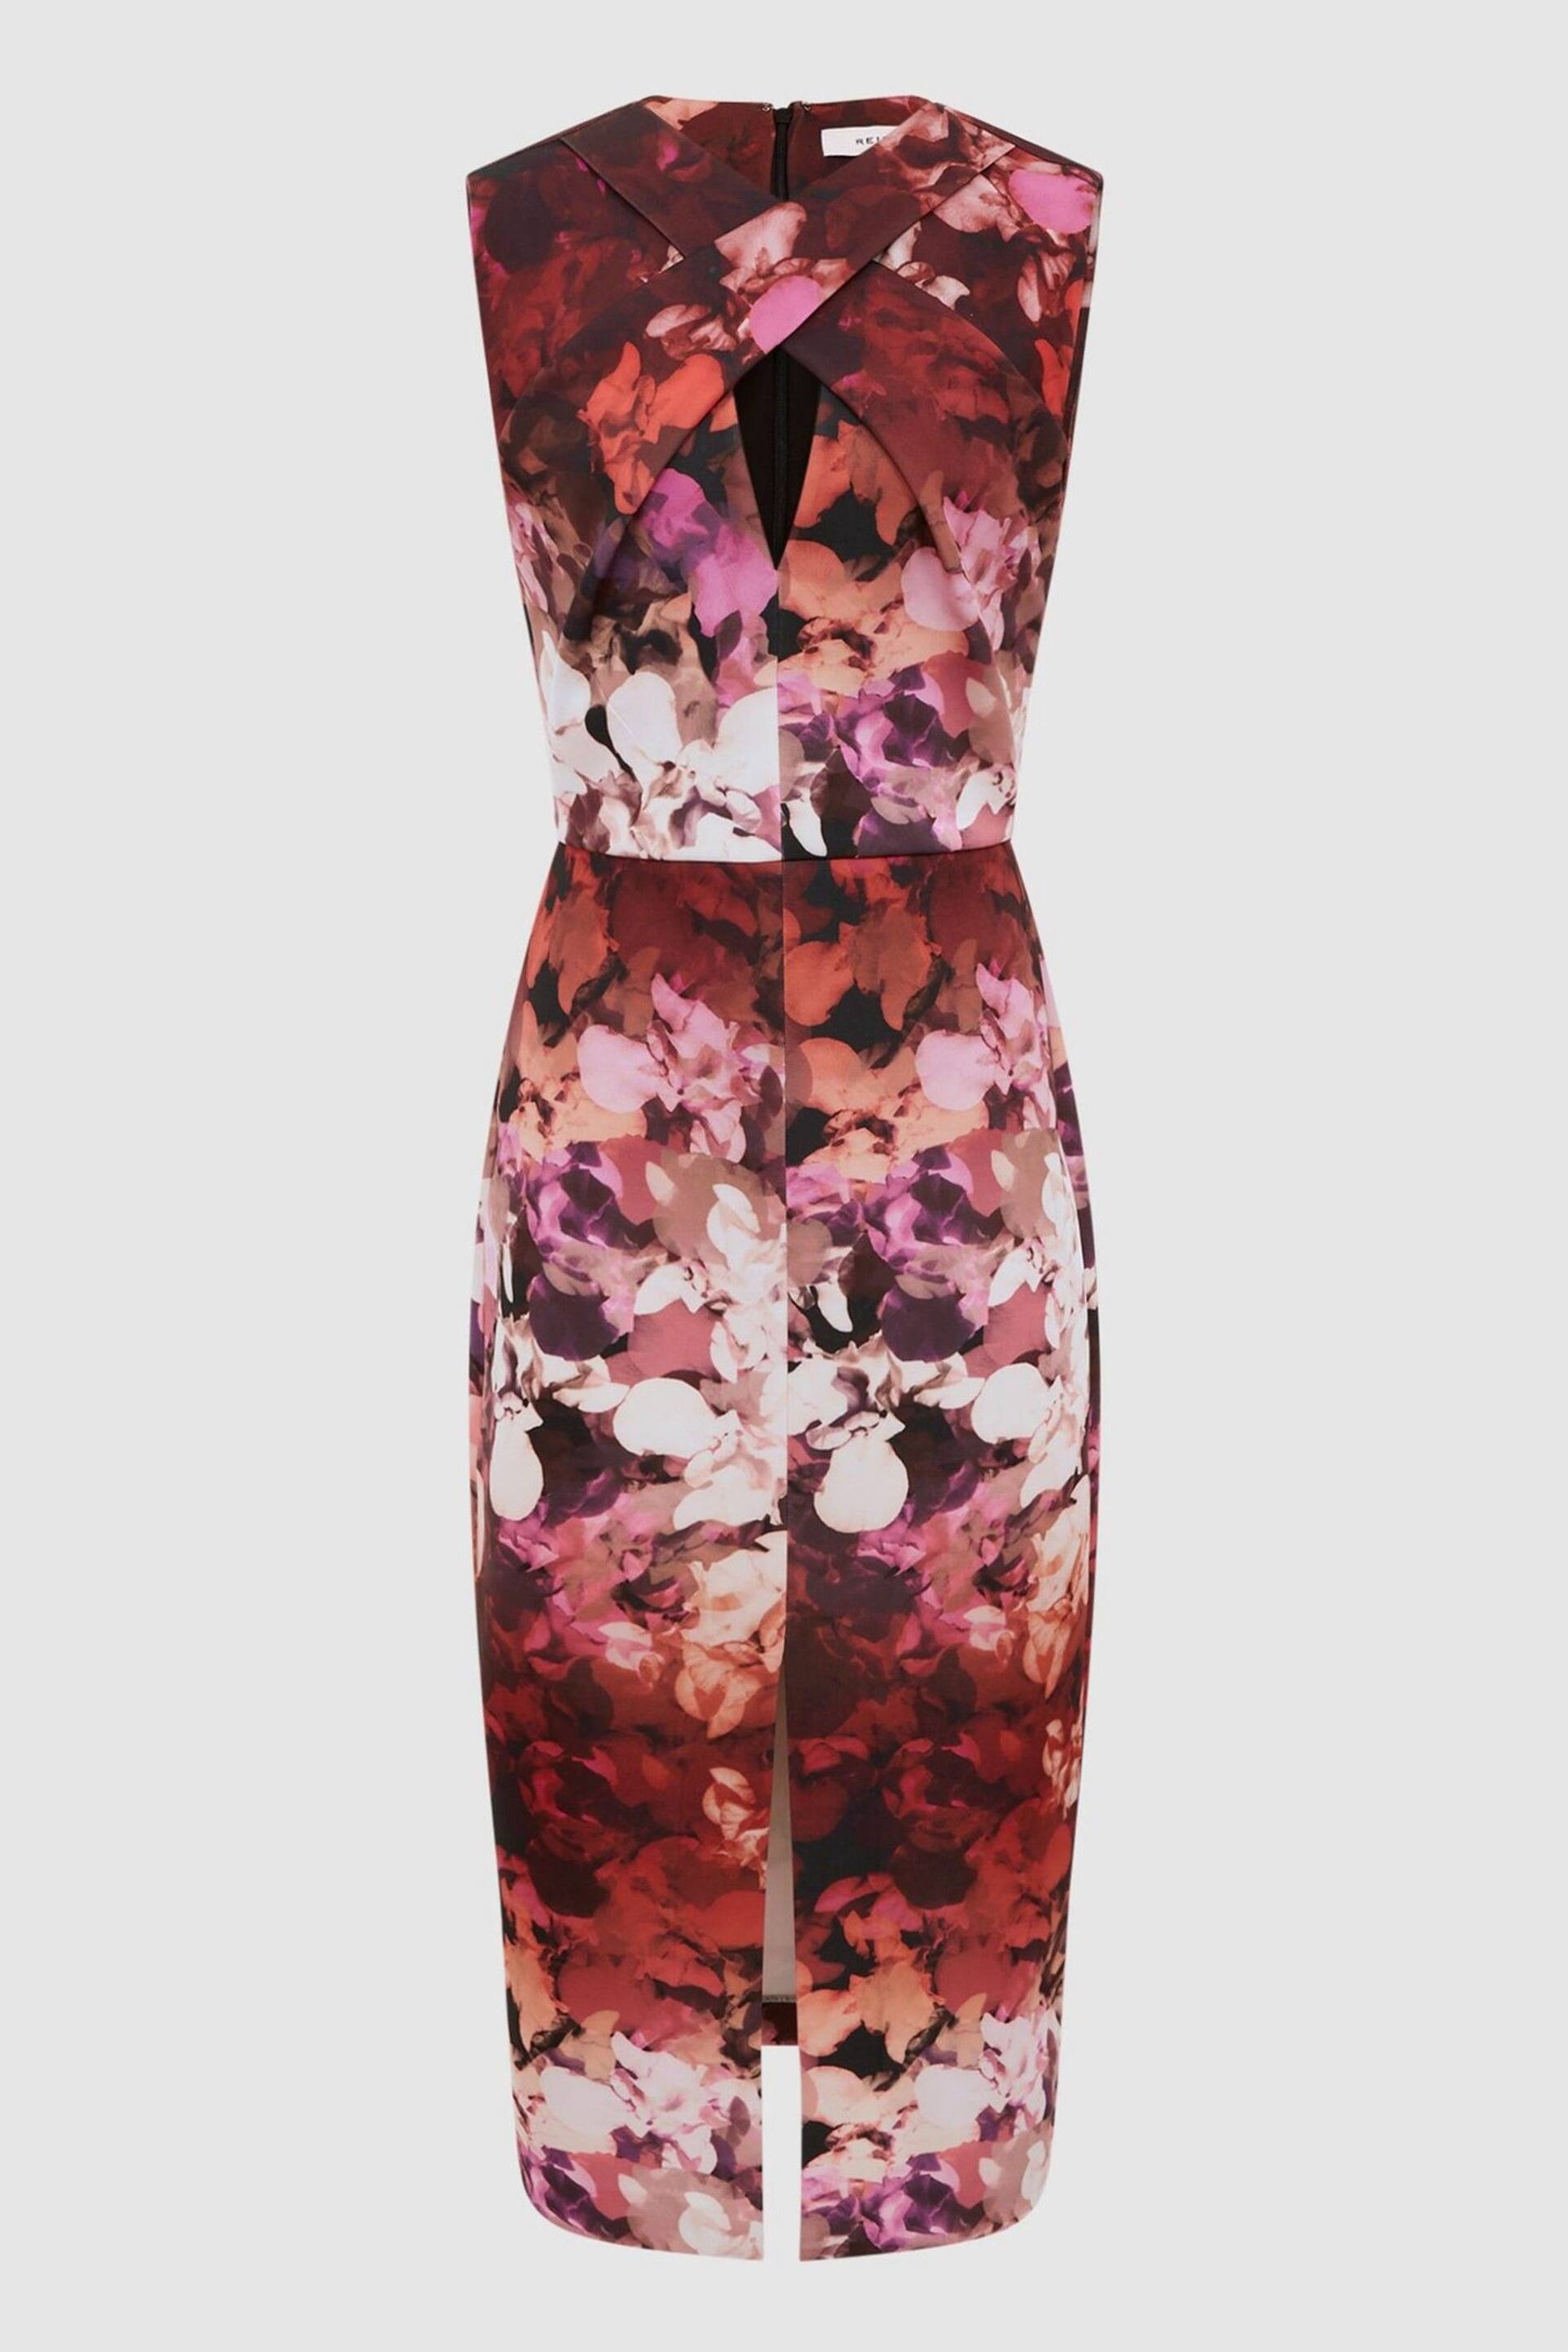 Reiss Berry Vega Floral Printed Bodycon Midi Dress - Image 2 of 6